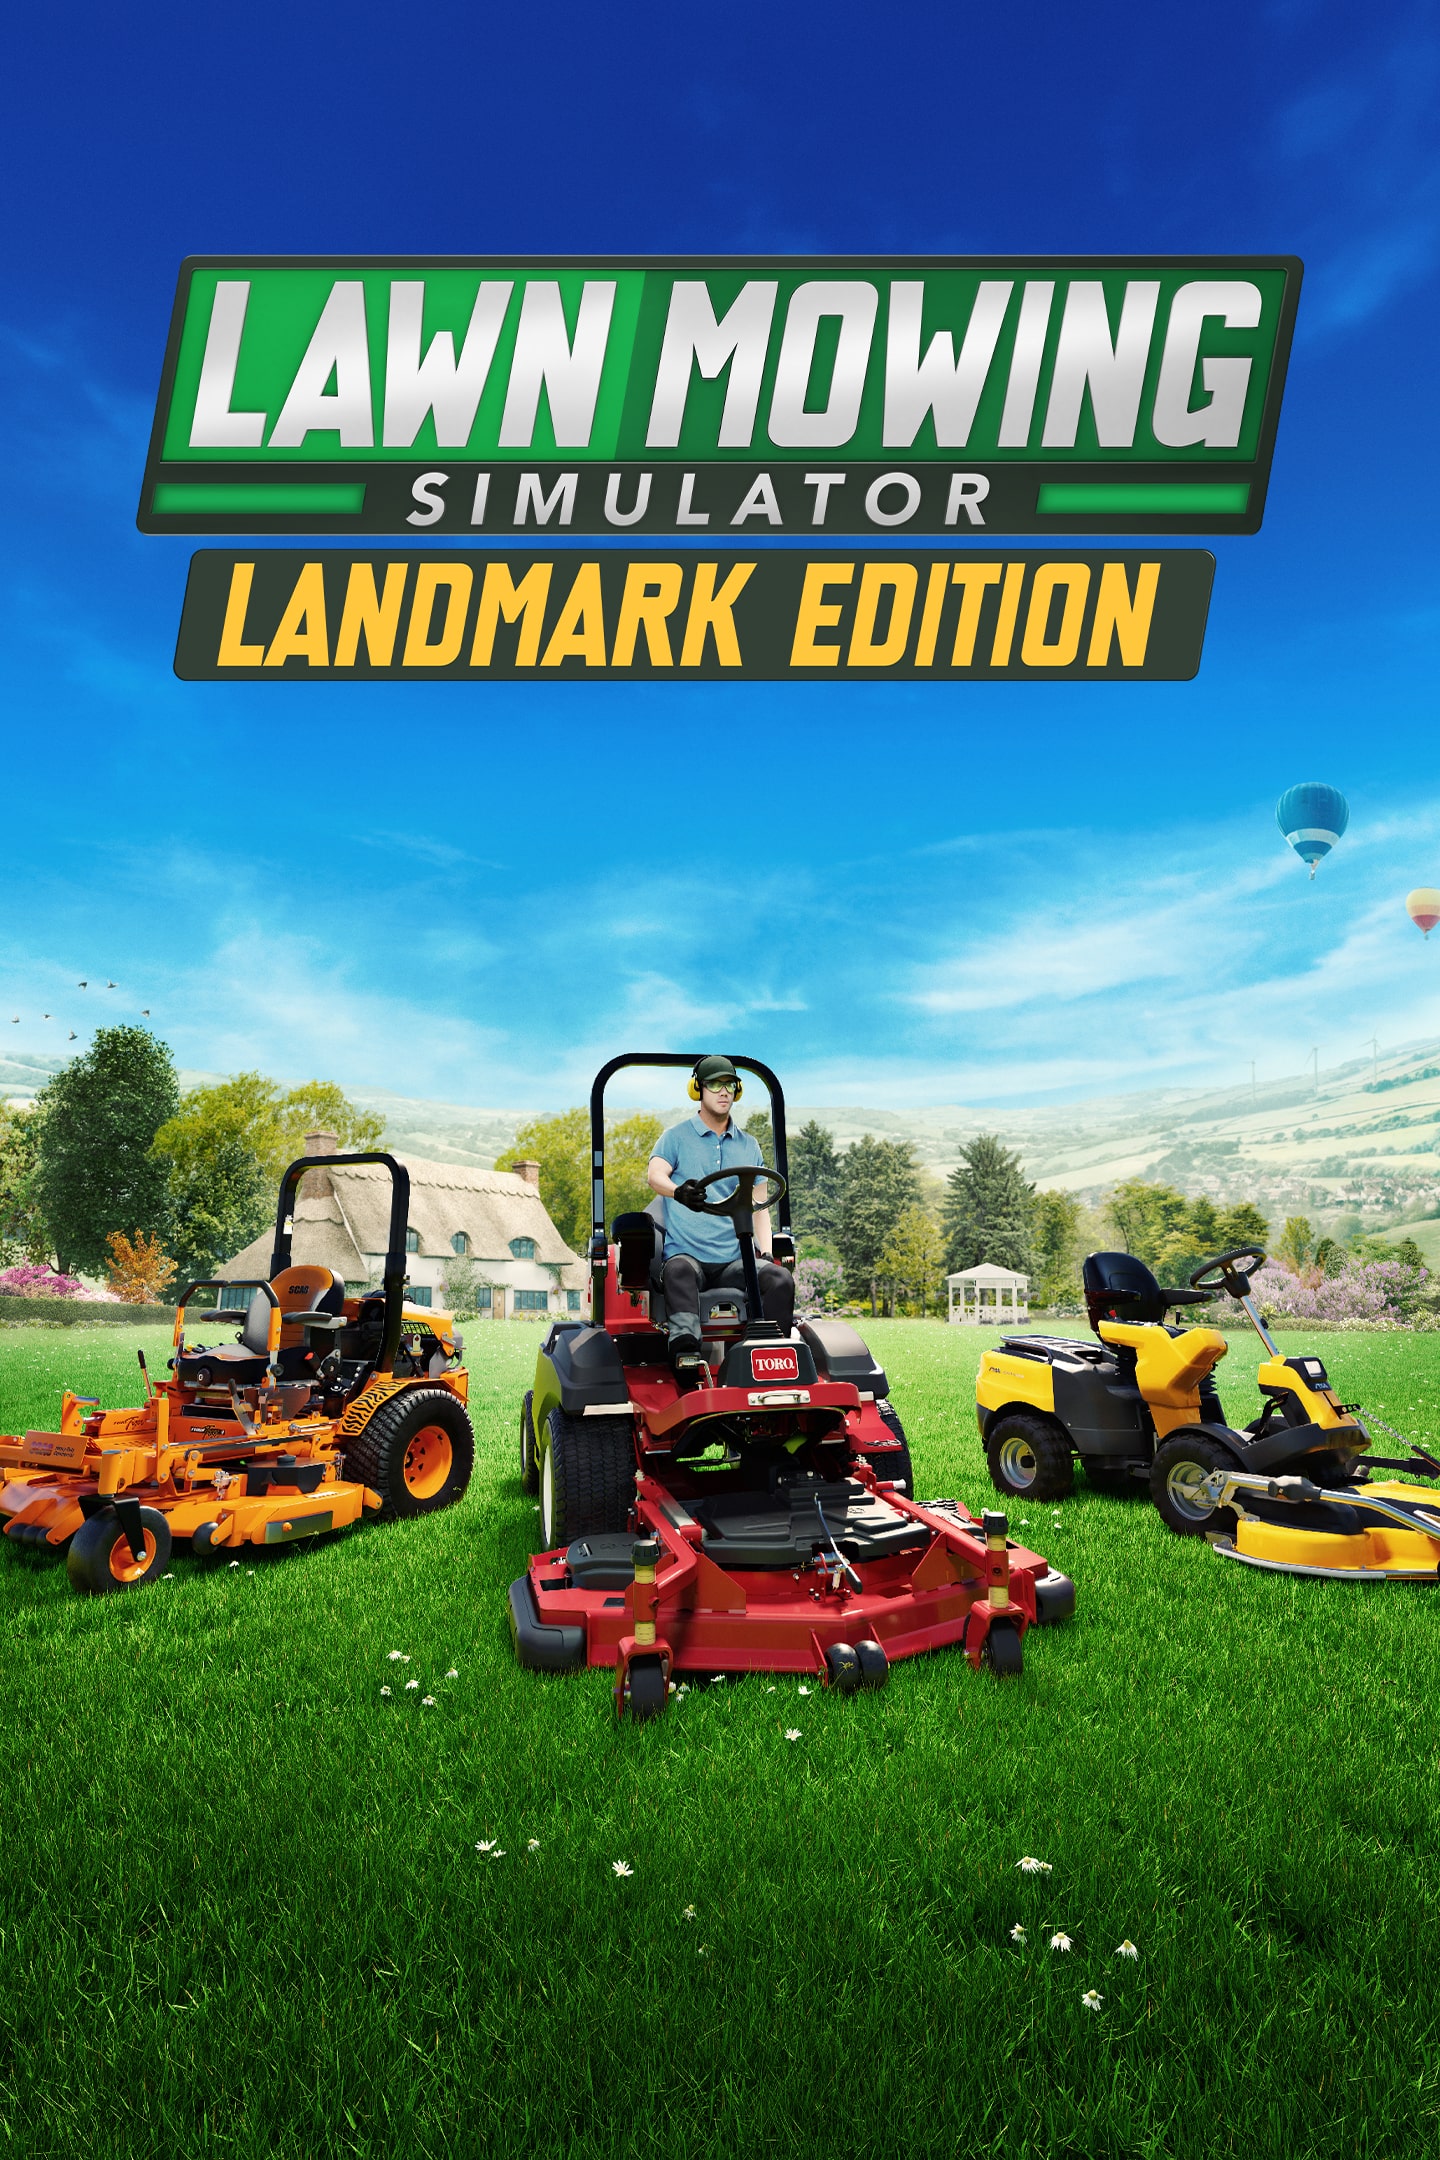 Mowing Landmark Lawn Edition Simulator: